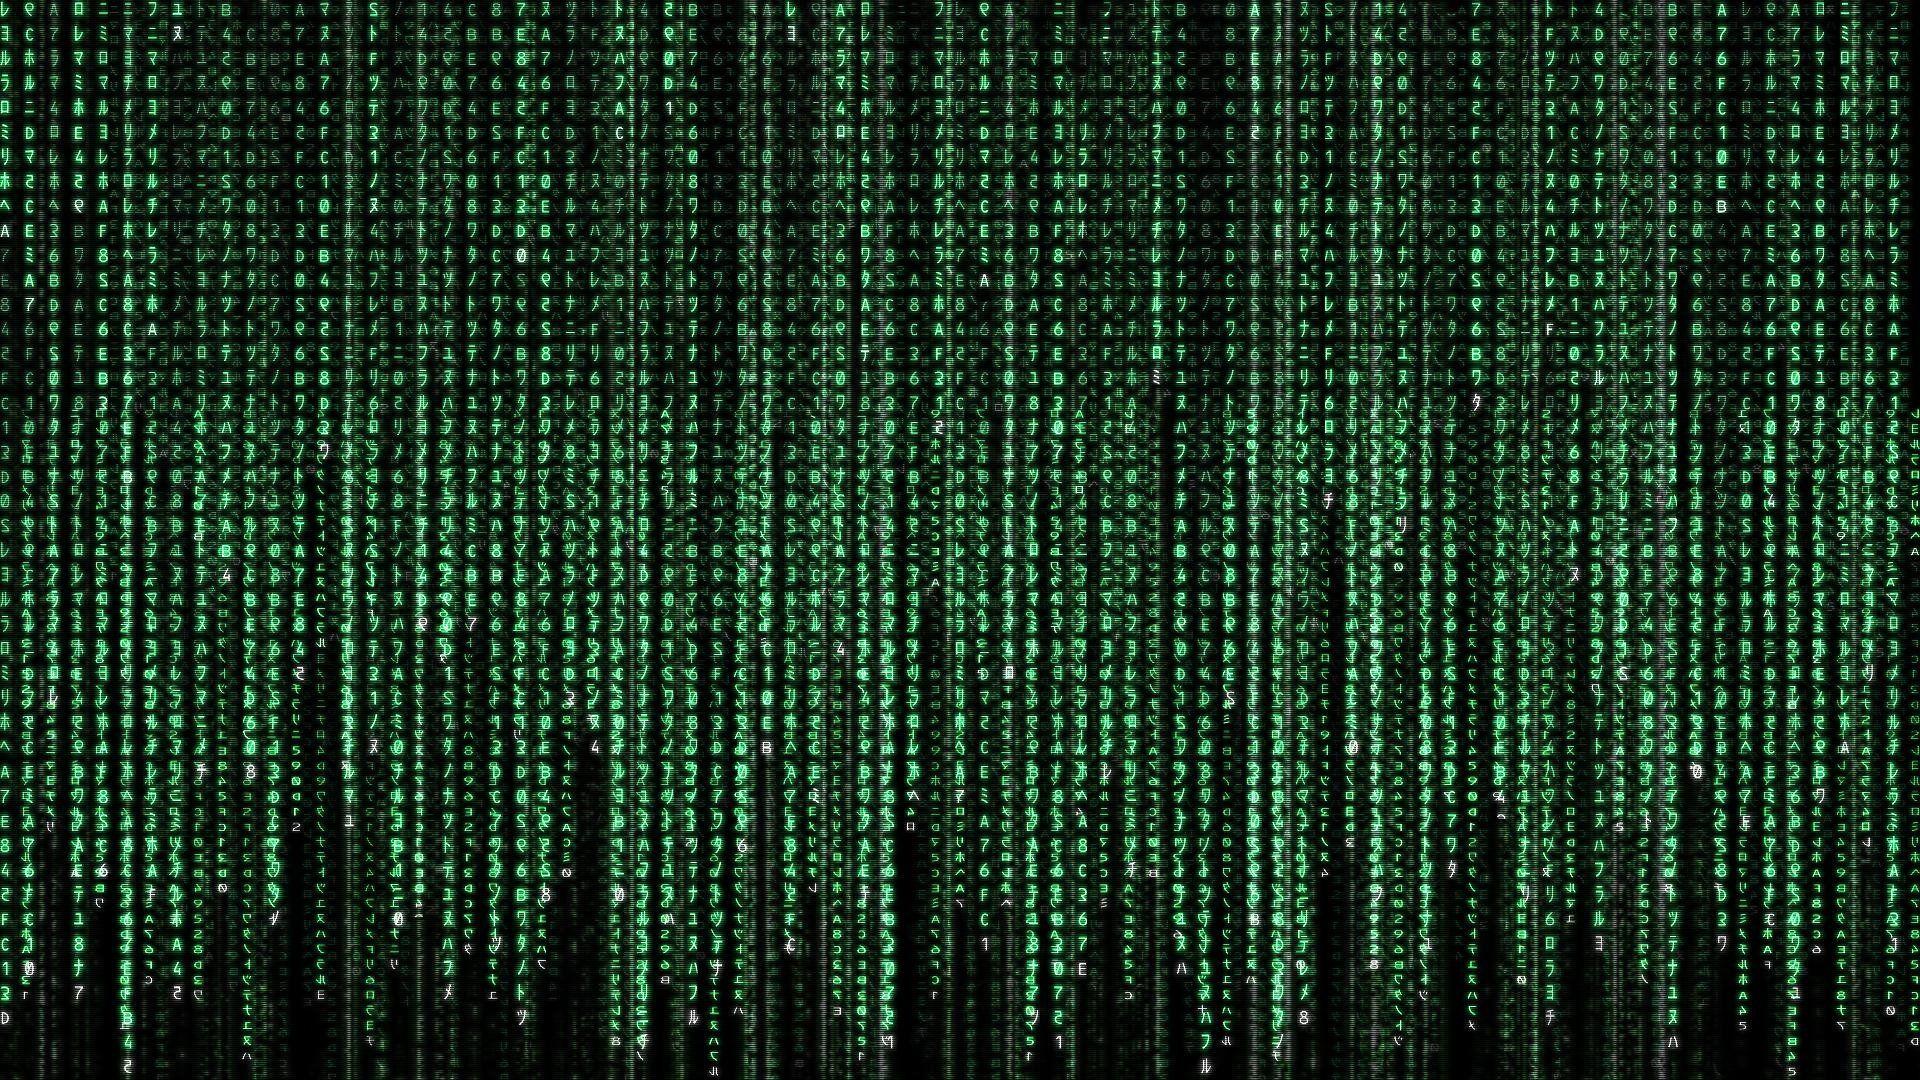 HD wallpaper matrix code The Matrix movies data cyberspace technology   Wallpaper Flare